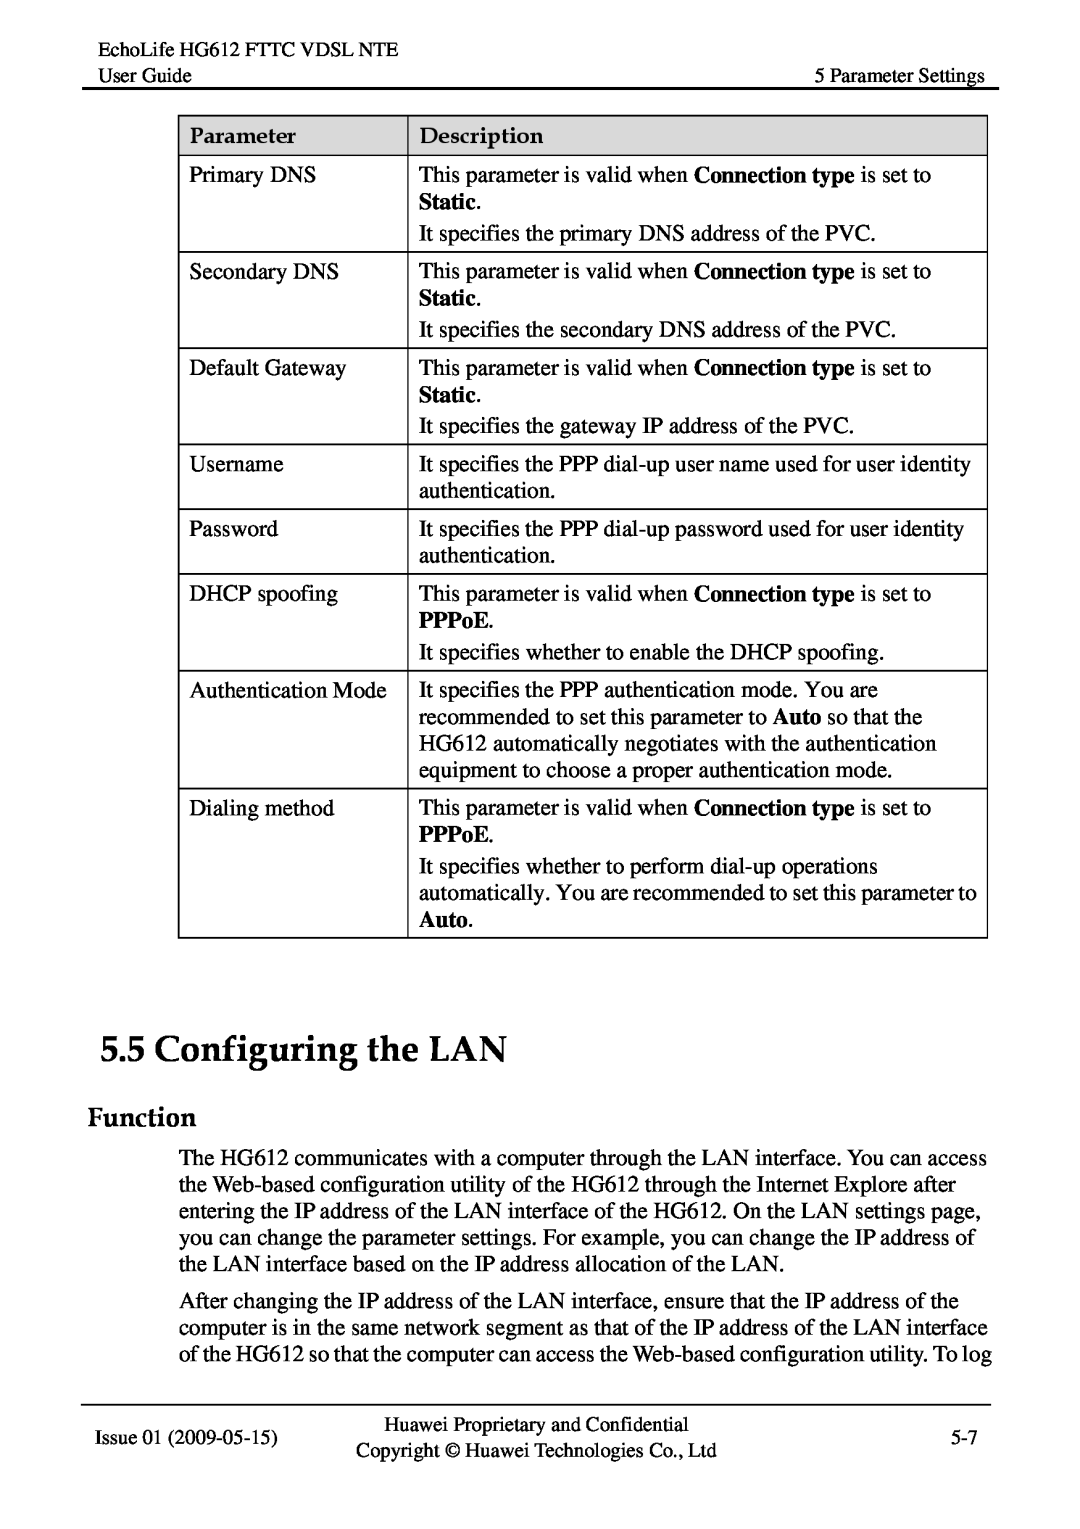 Huawei HG612FTTC VDSL NTE manual Configuring the LAN, Function, Parameter, Description, Static, PPPoE, Auto 